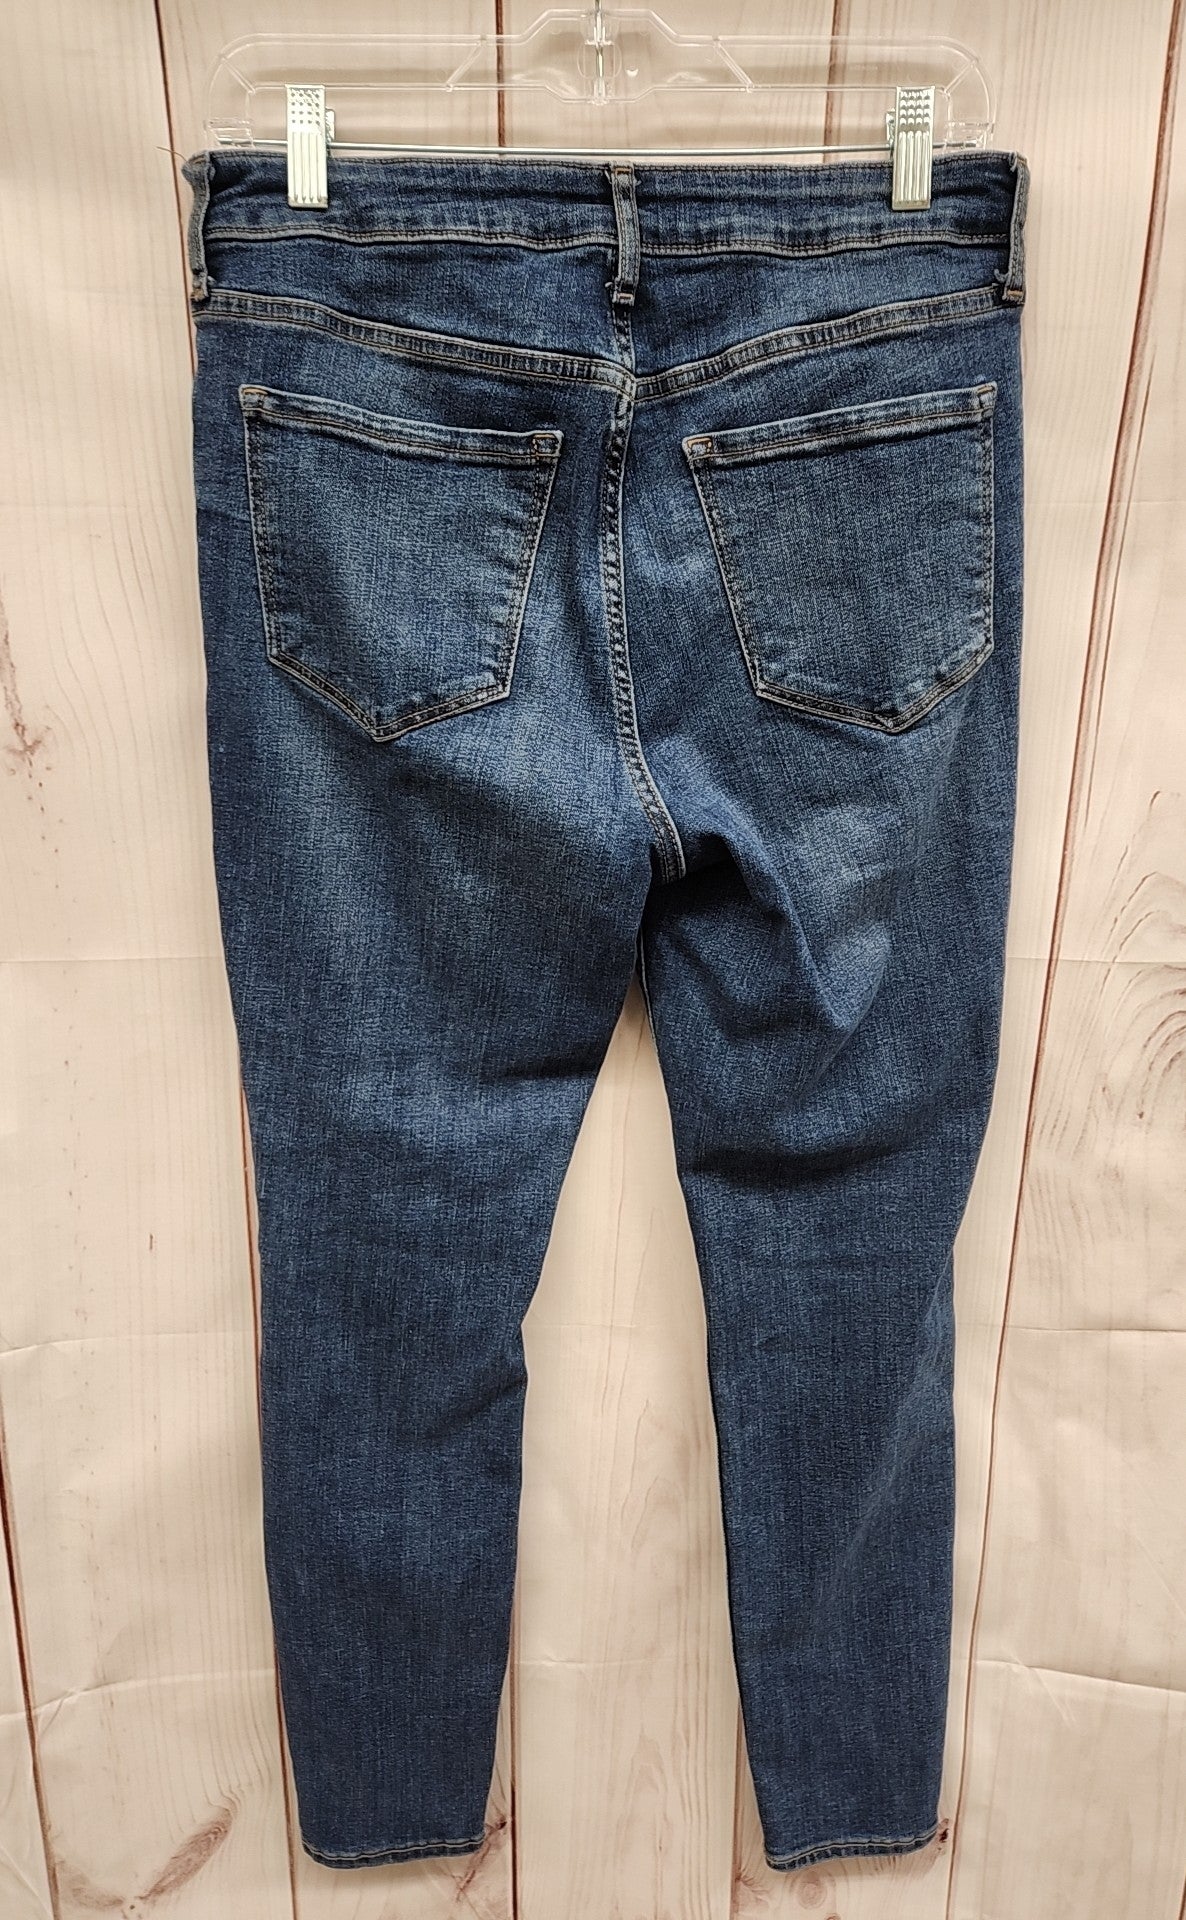 Old Navy Women's Size 30 (9-10) Blue Jeans